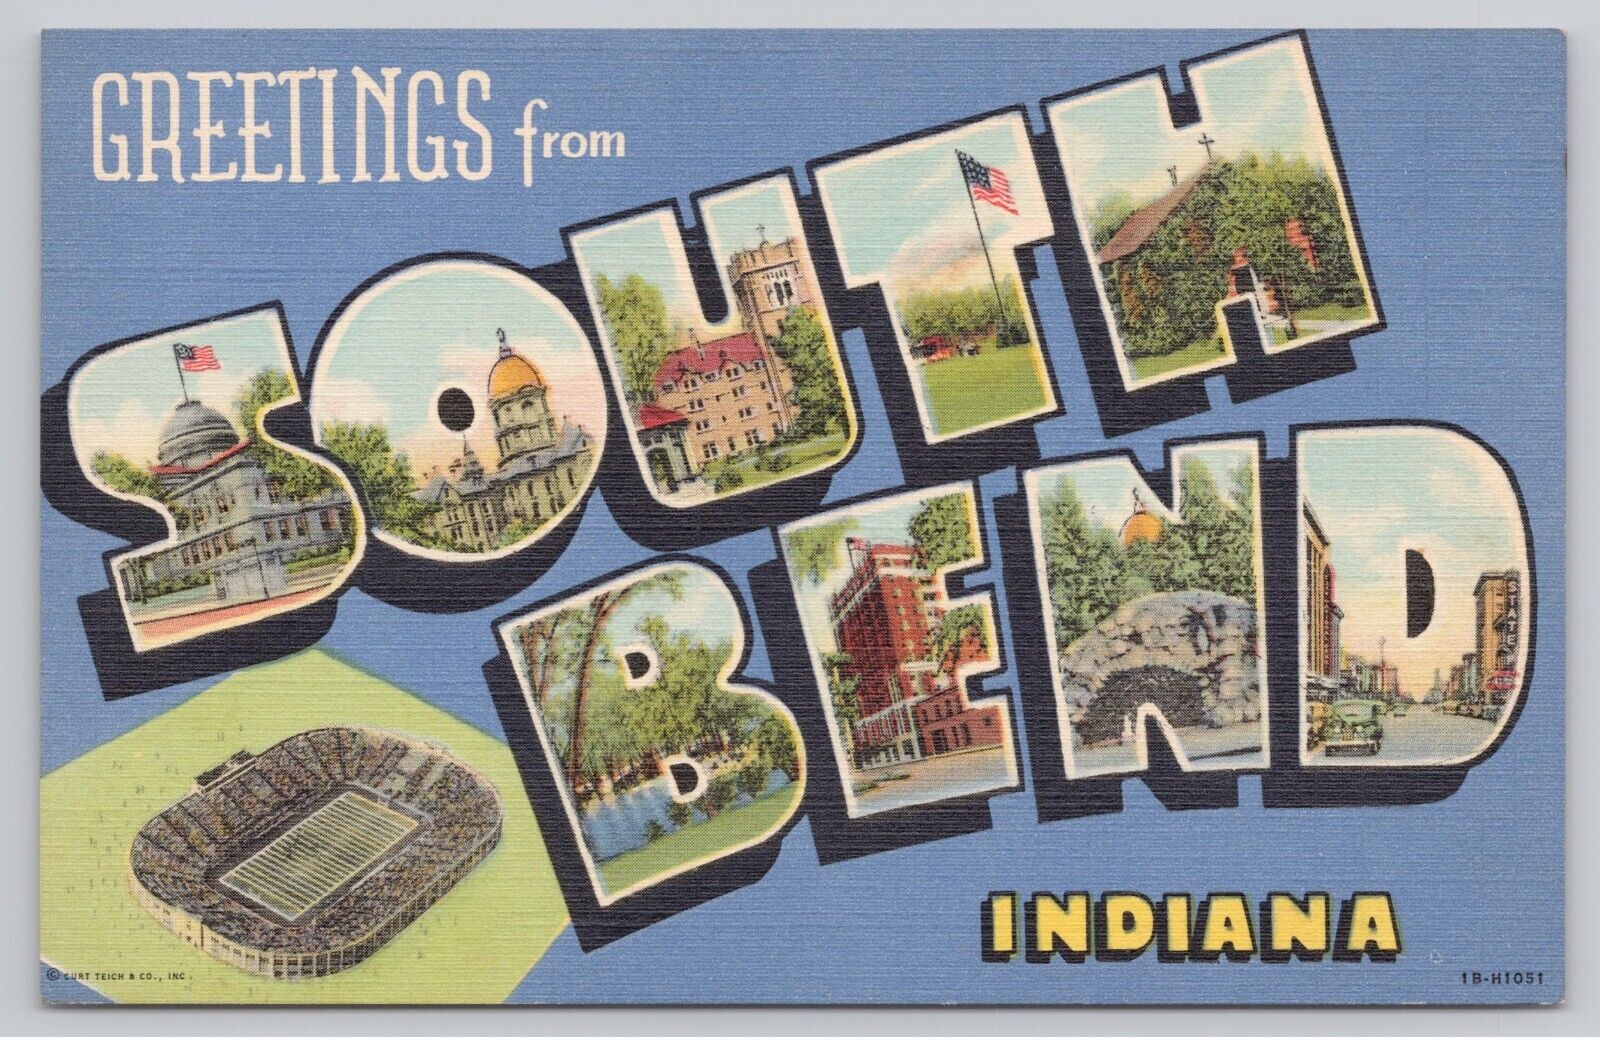 South Bend Indiana, Large Letter Greetings, Football Stadium, Vintage Postcard